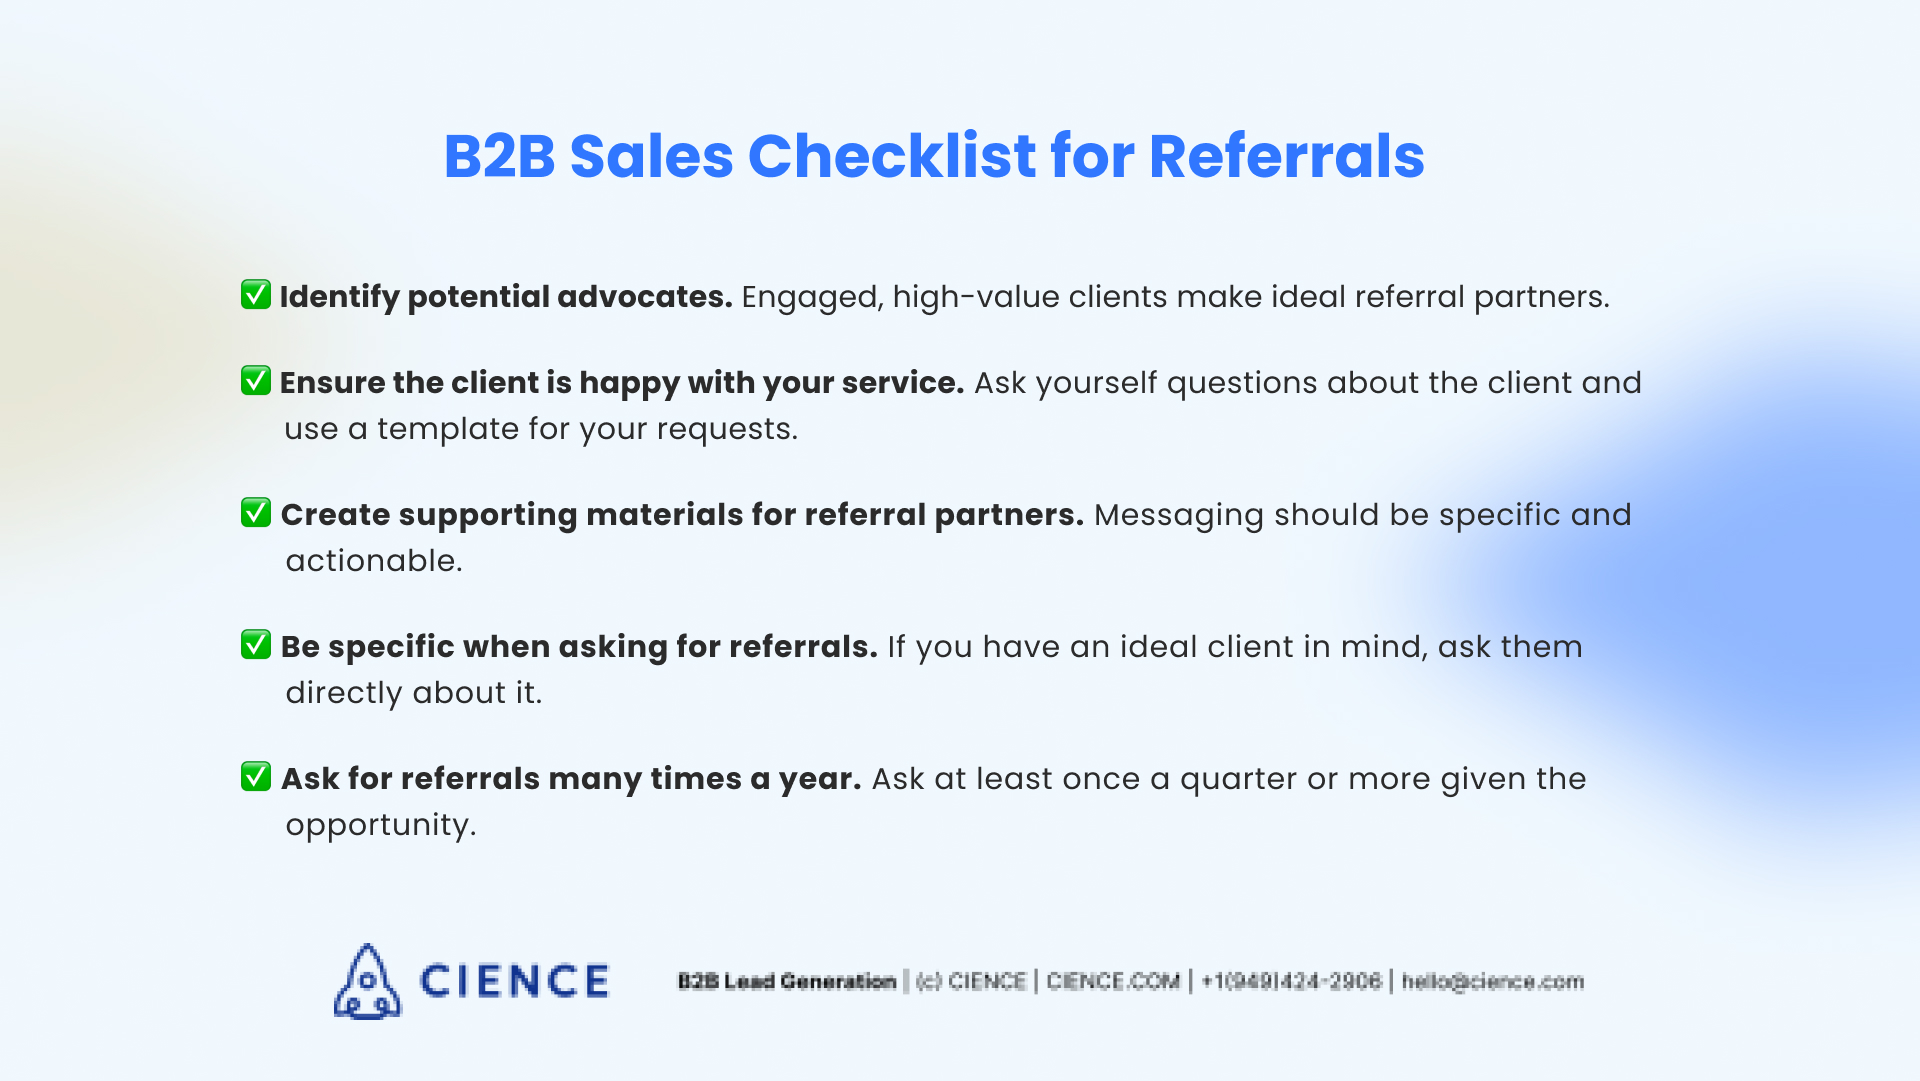 B2B Sales Checklist for Referrals